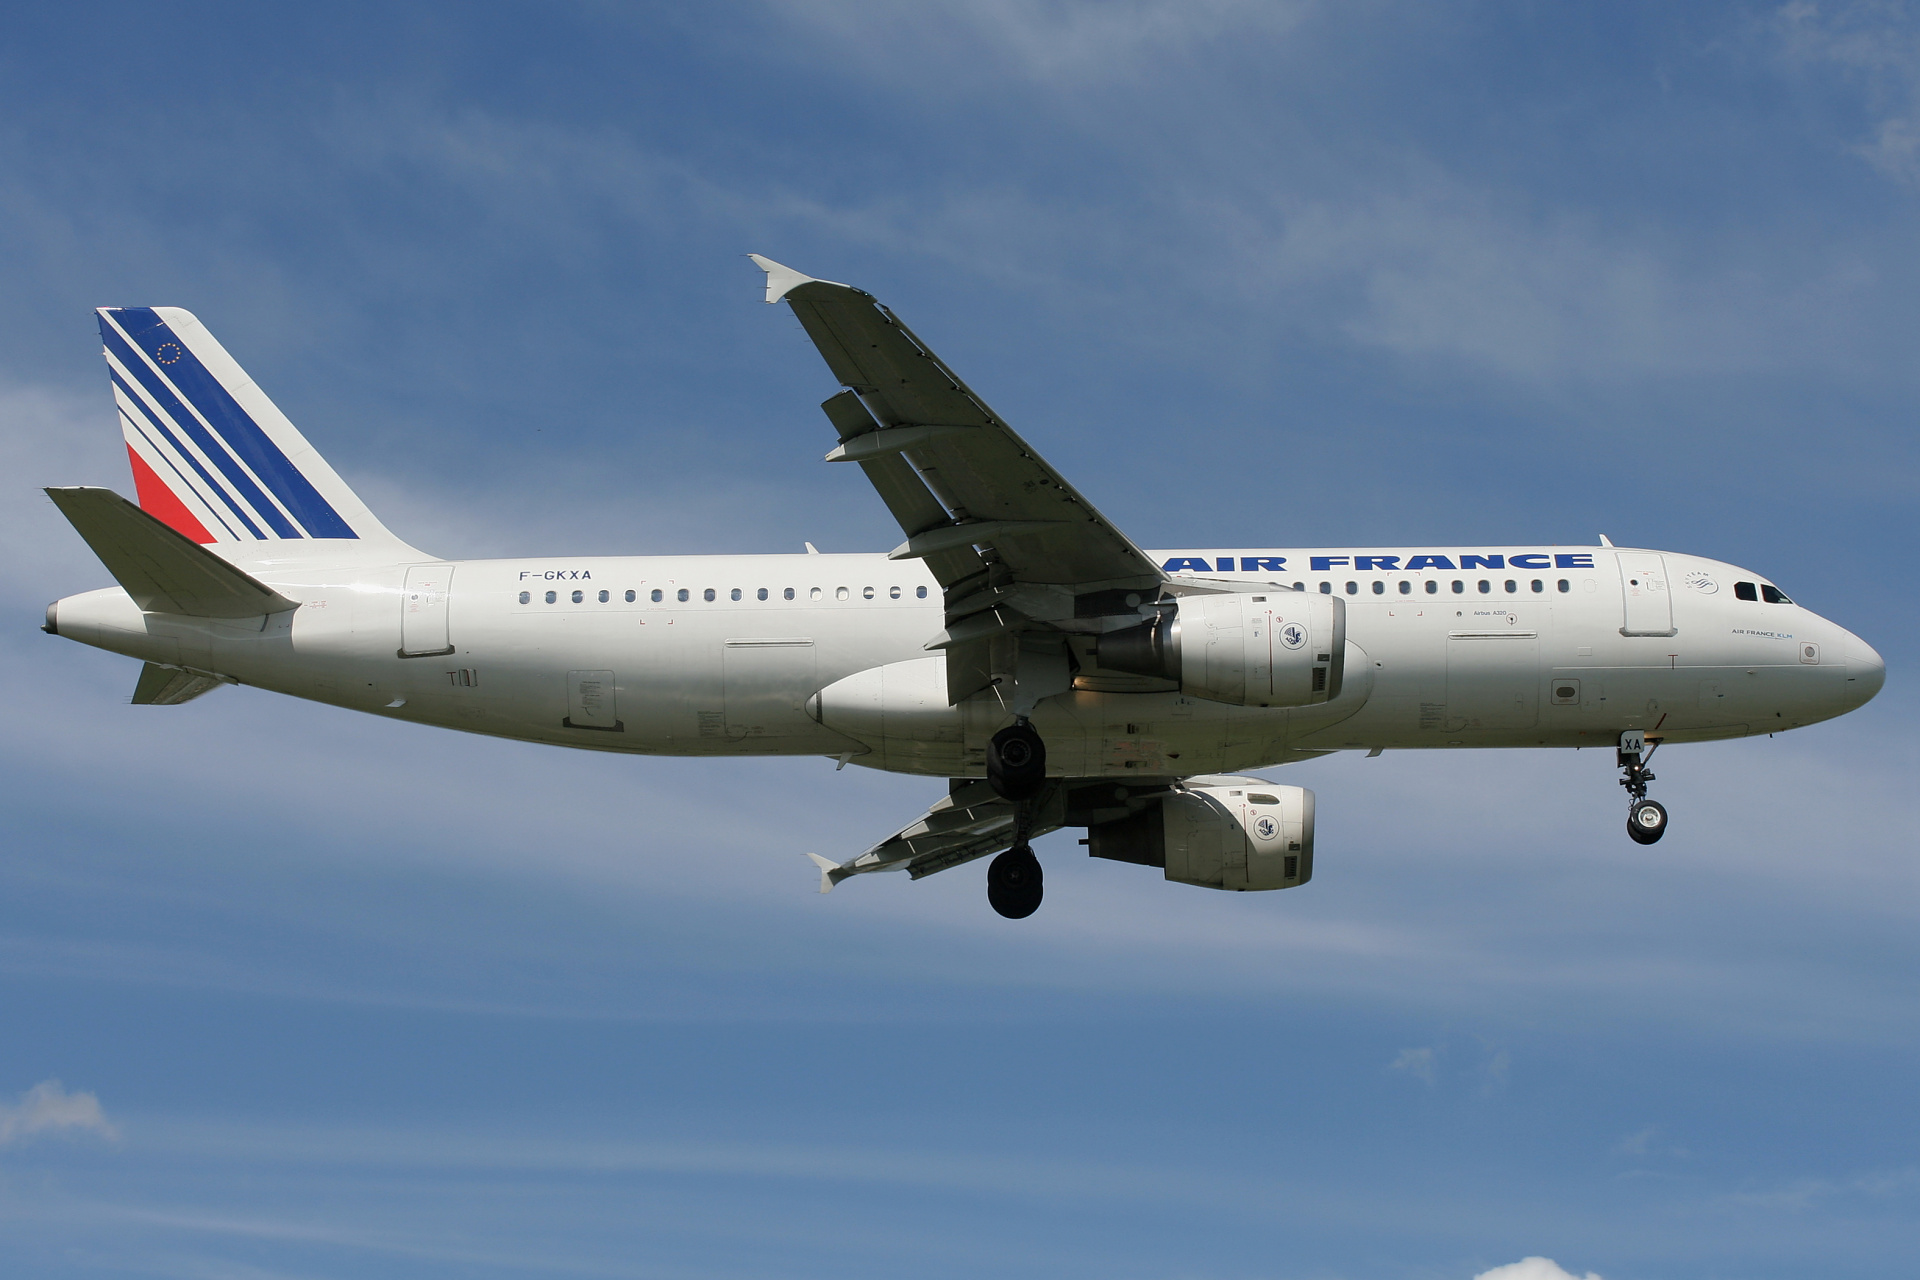 F-GKXA (Aircraft » EPWA Spotting » Airbus A320-200 » Air France)